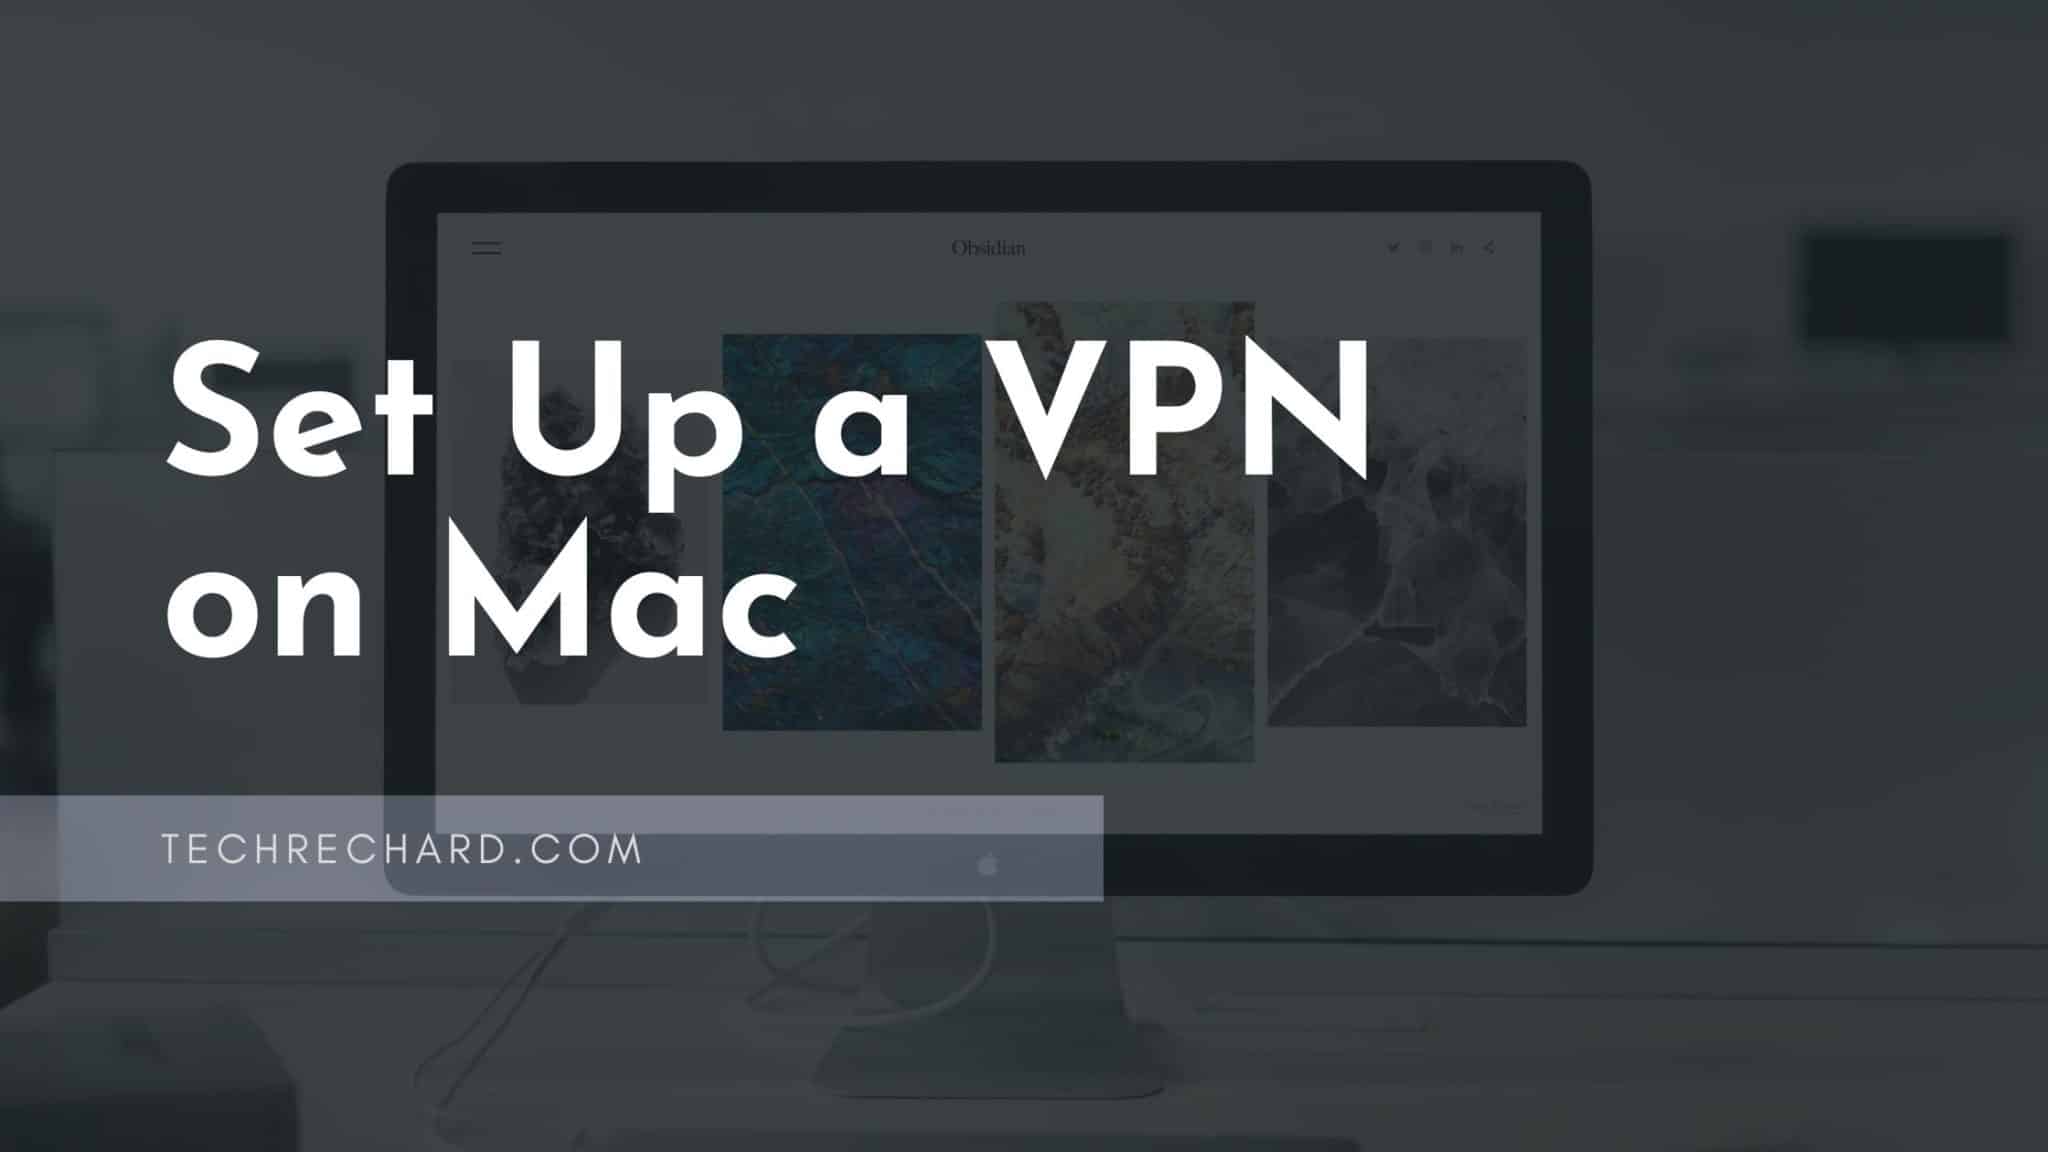 run a vpn on mac for free